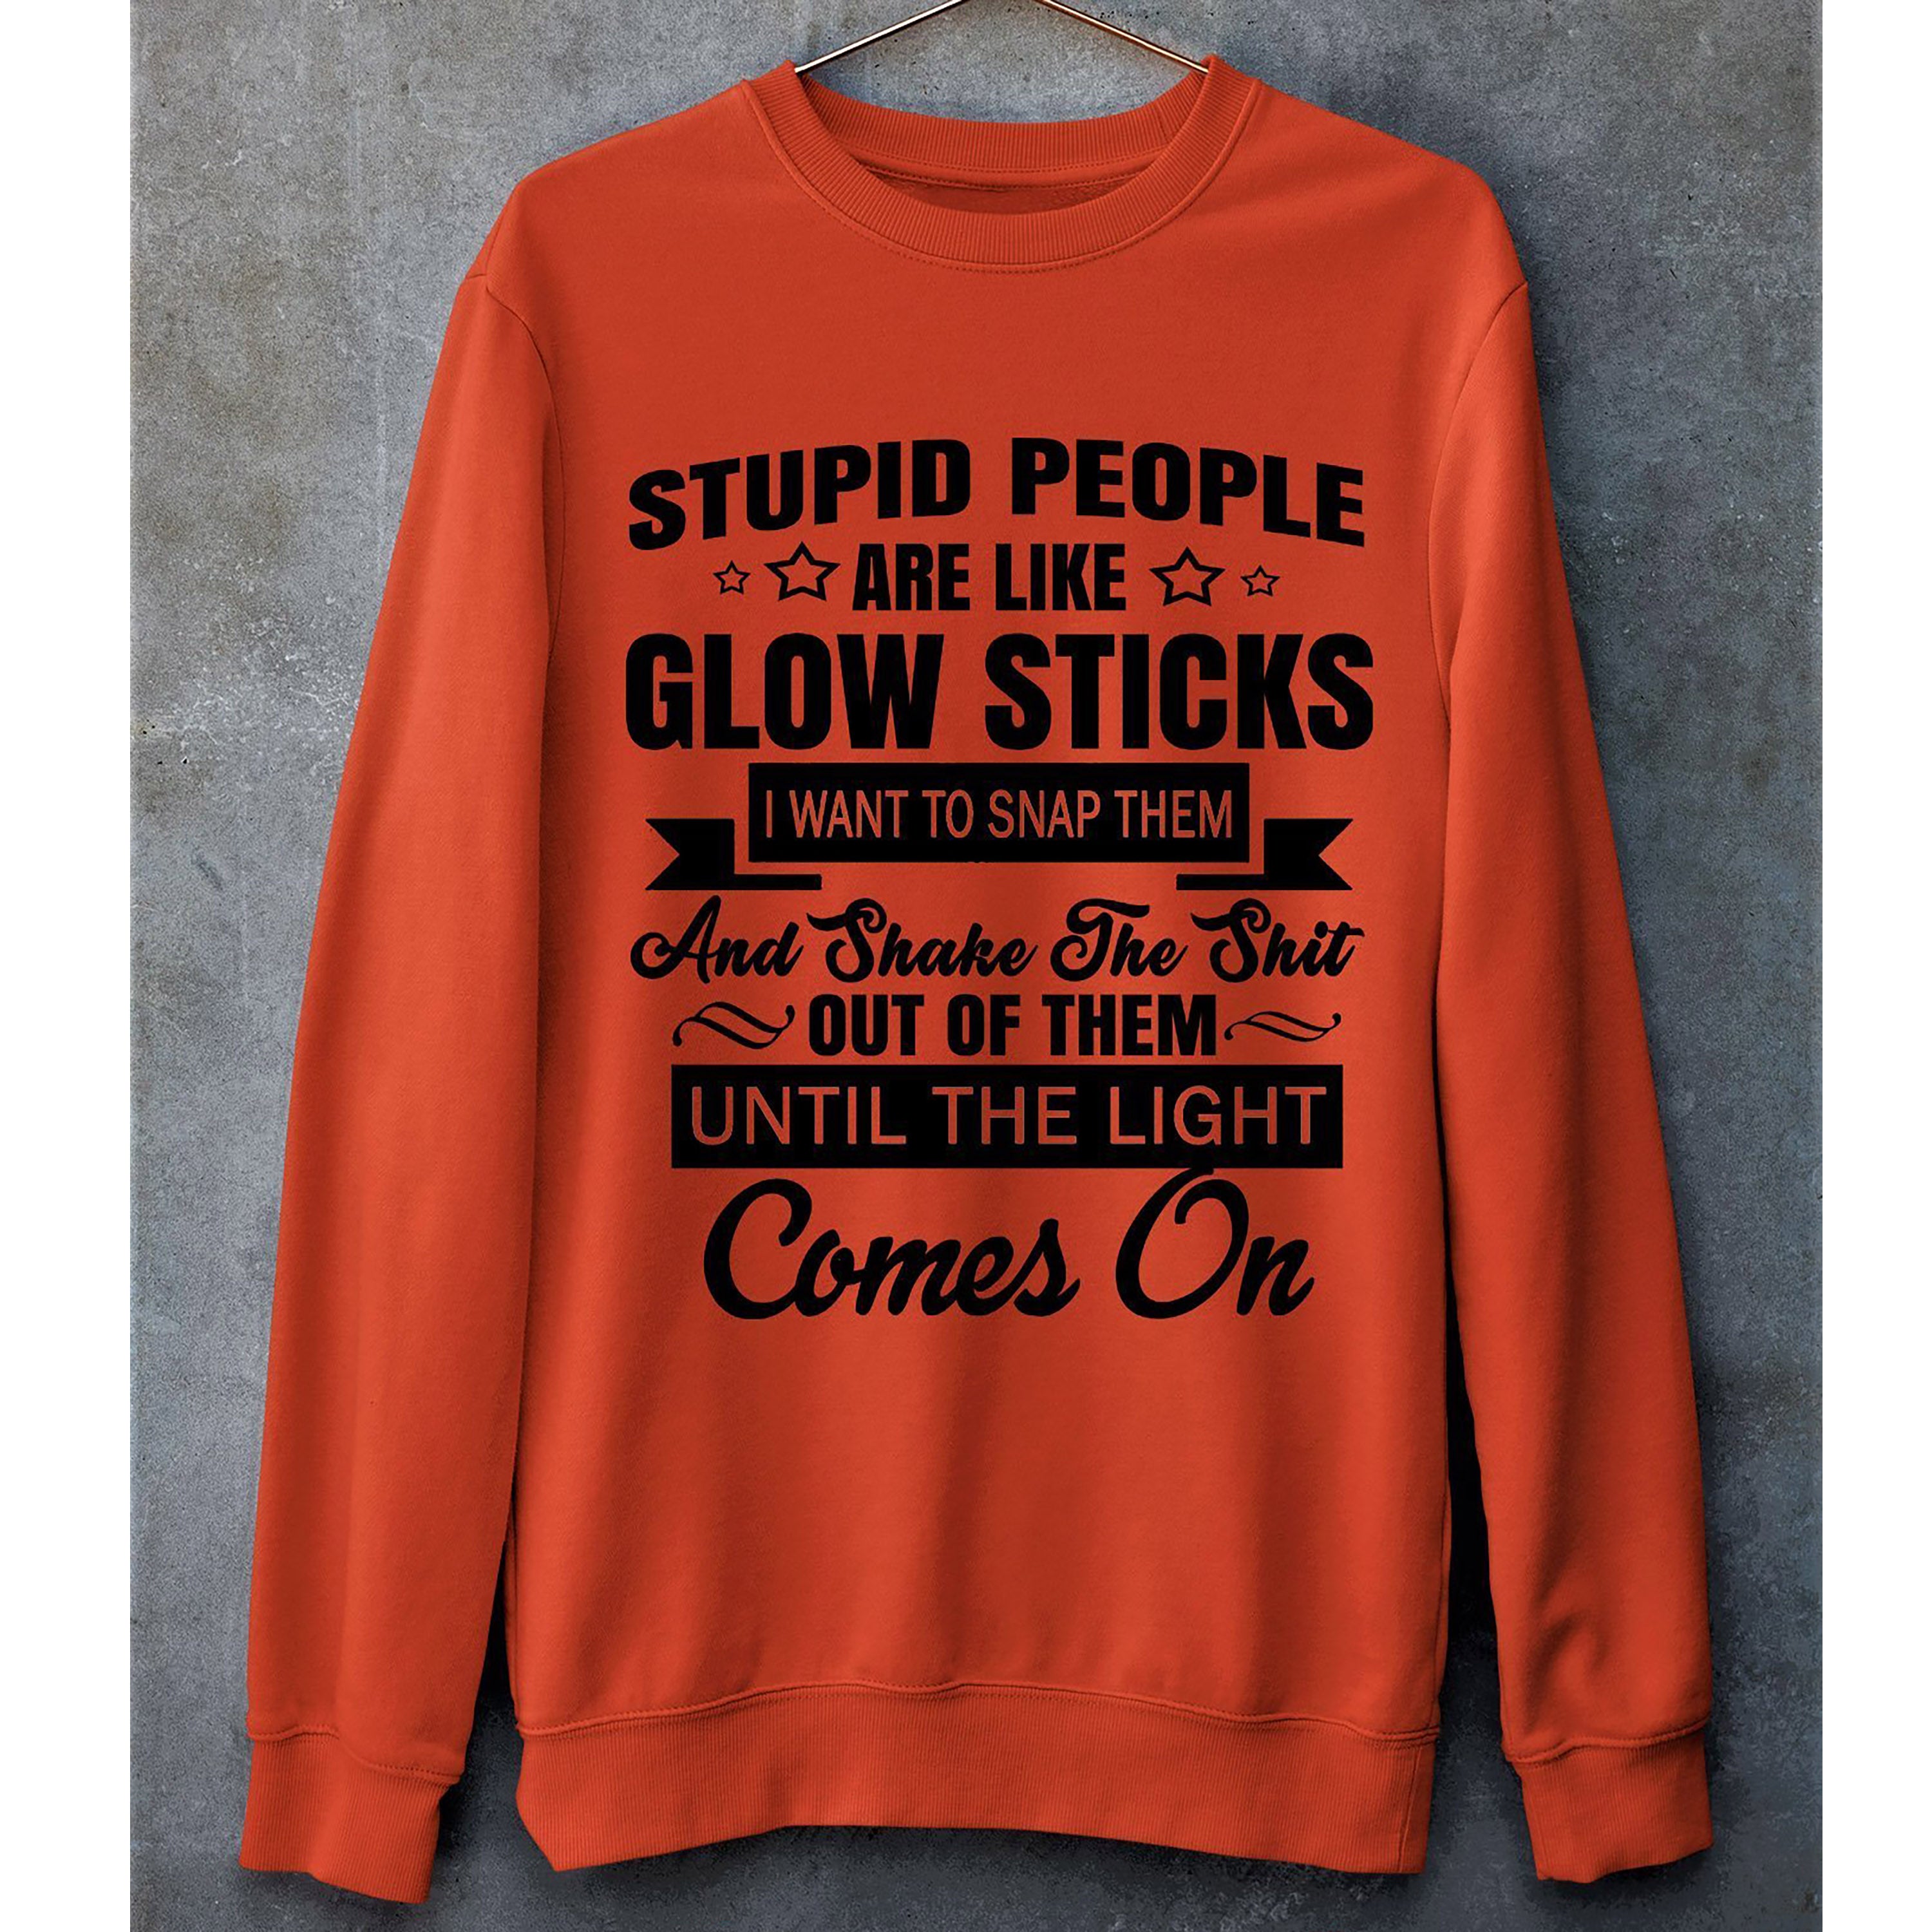 "Stupid People are like Glowstick"" Hoodie And SweatShirt.